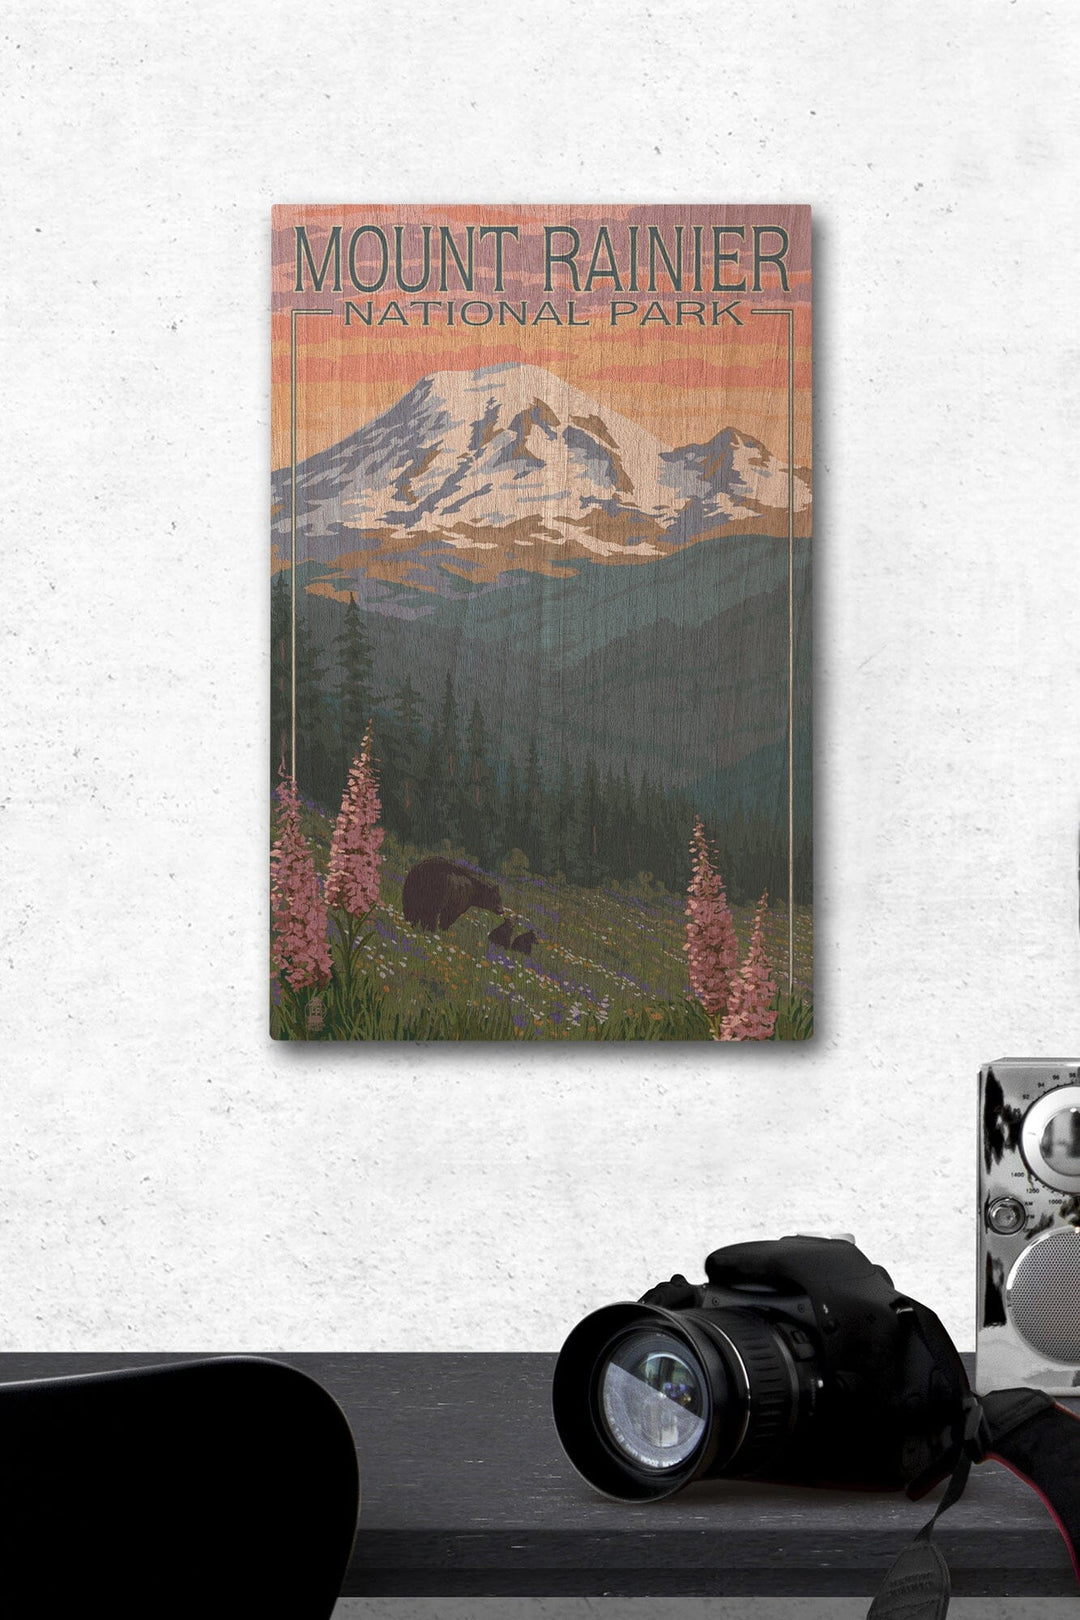 Mount Rainier National Park, Washington, Bear & Spring Flowers, Lantern Press Artwork, Wood Signs and Postcards Wood Lantern Press 12 x 18 Wood Gallery Print 